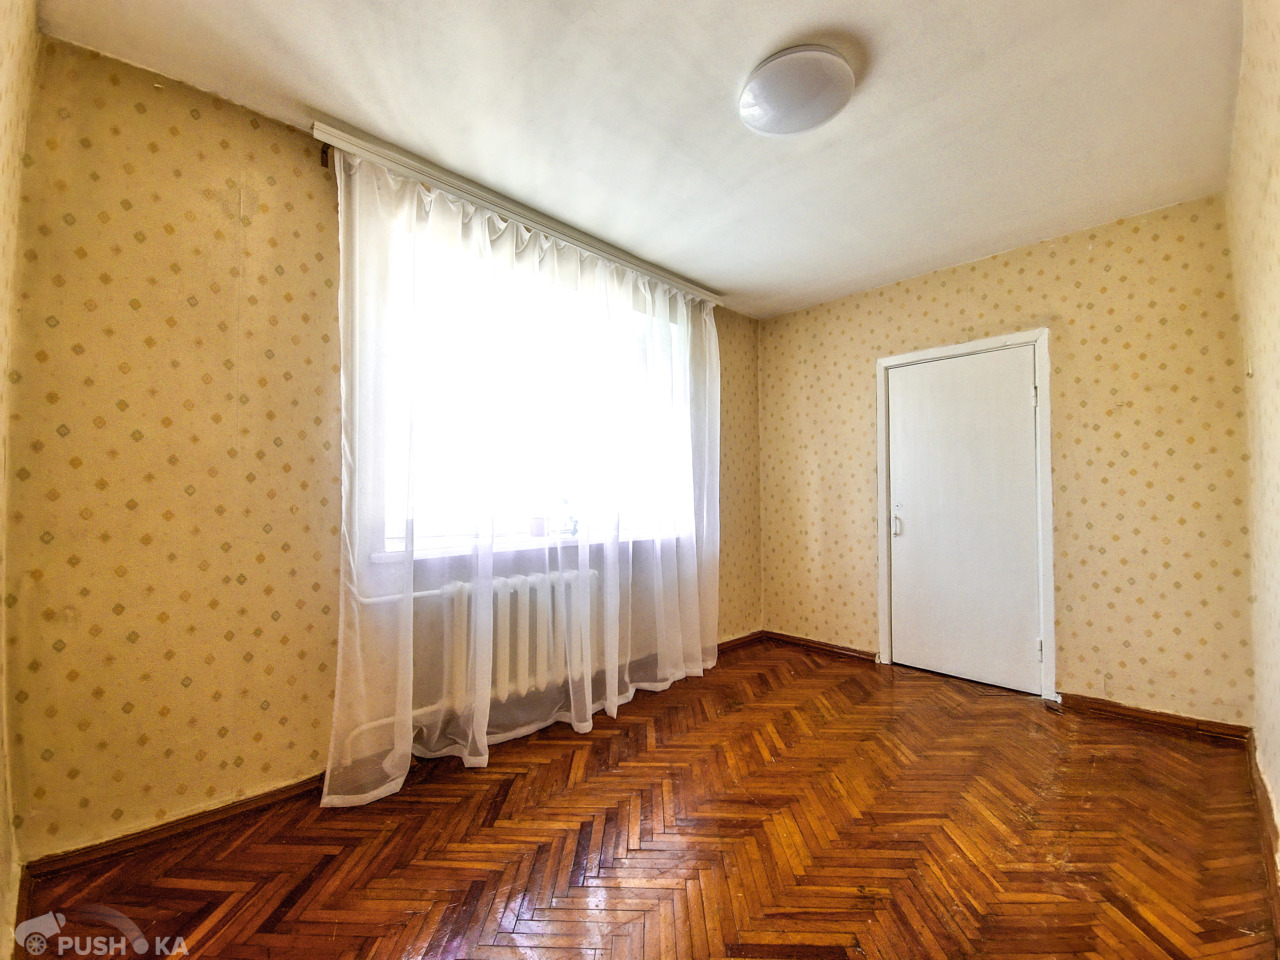 Продаётся 4-комнатная квартира 74.0 кв.м. этаж 6/6 за 6 999 999 руб 